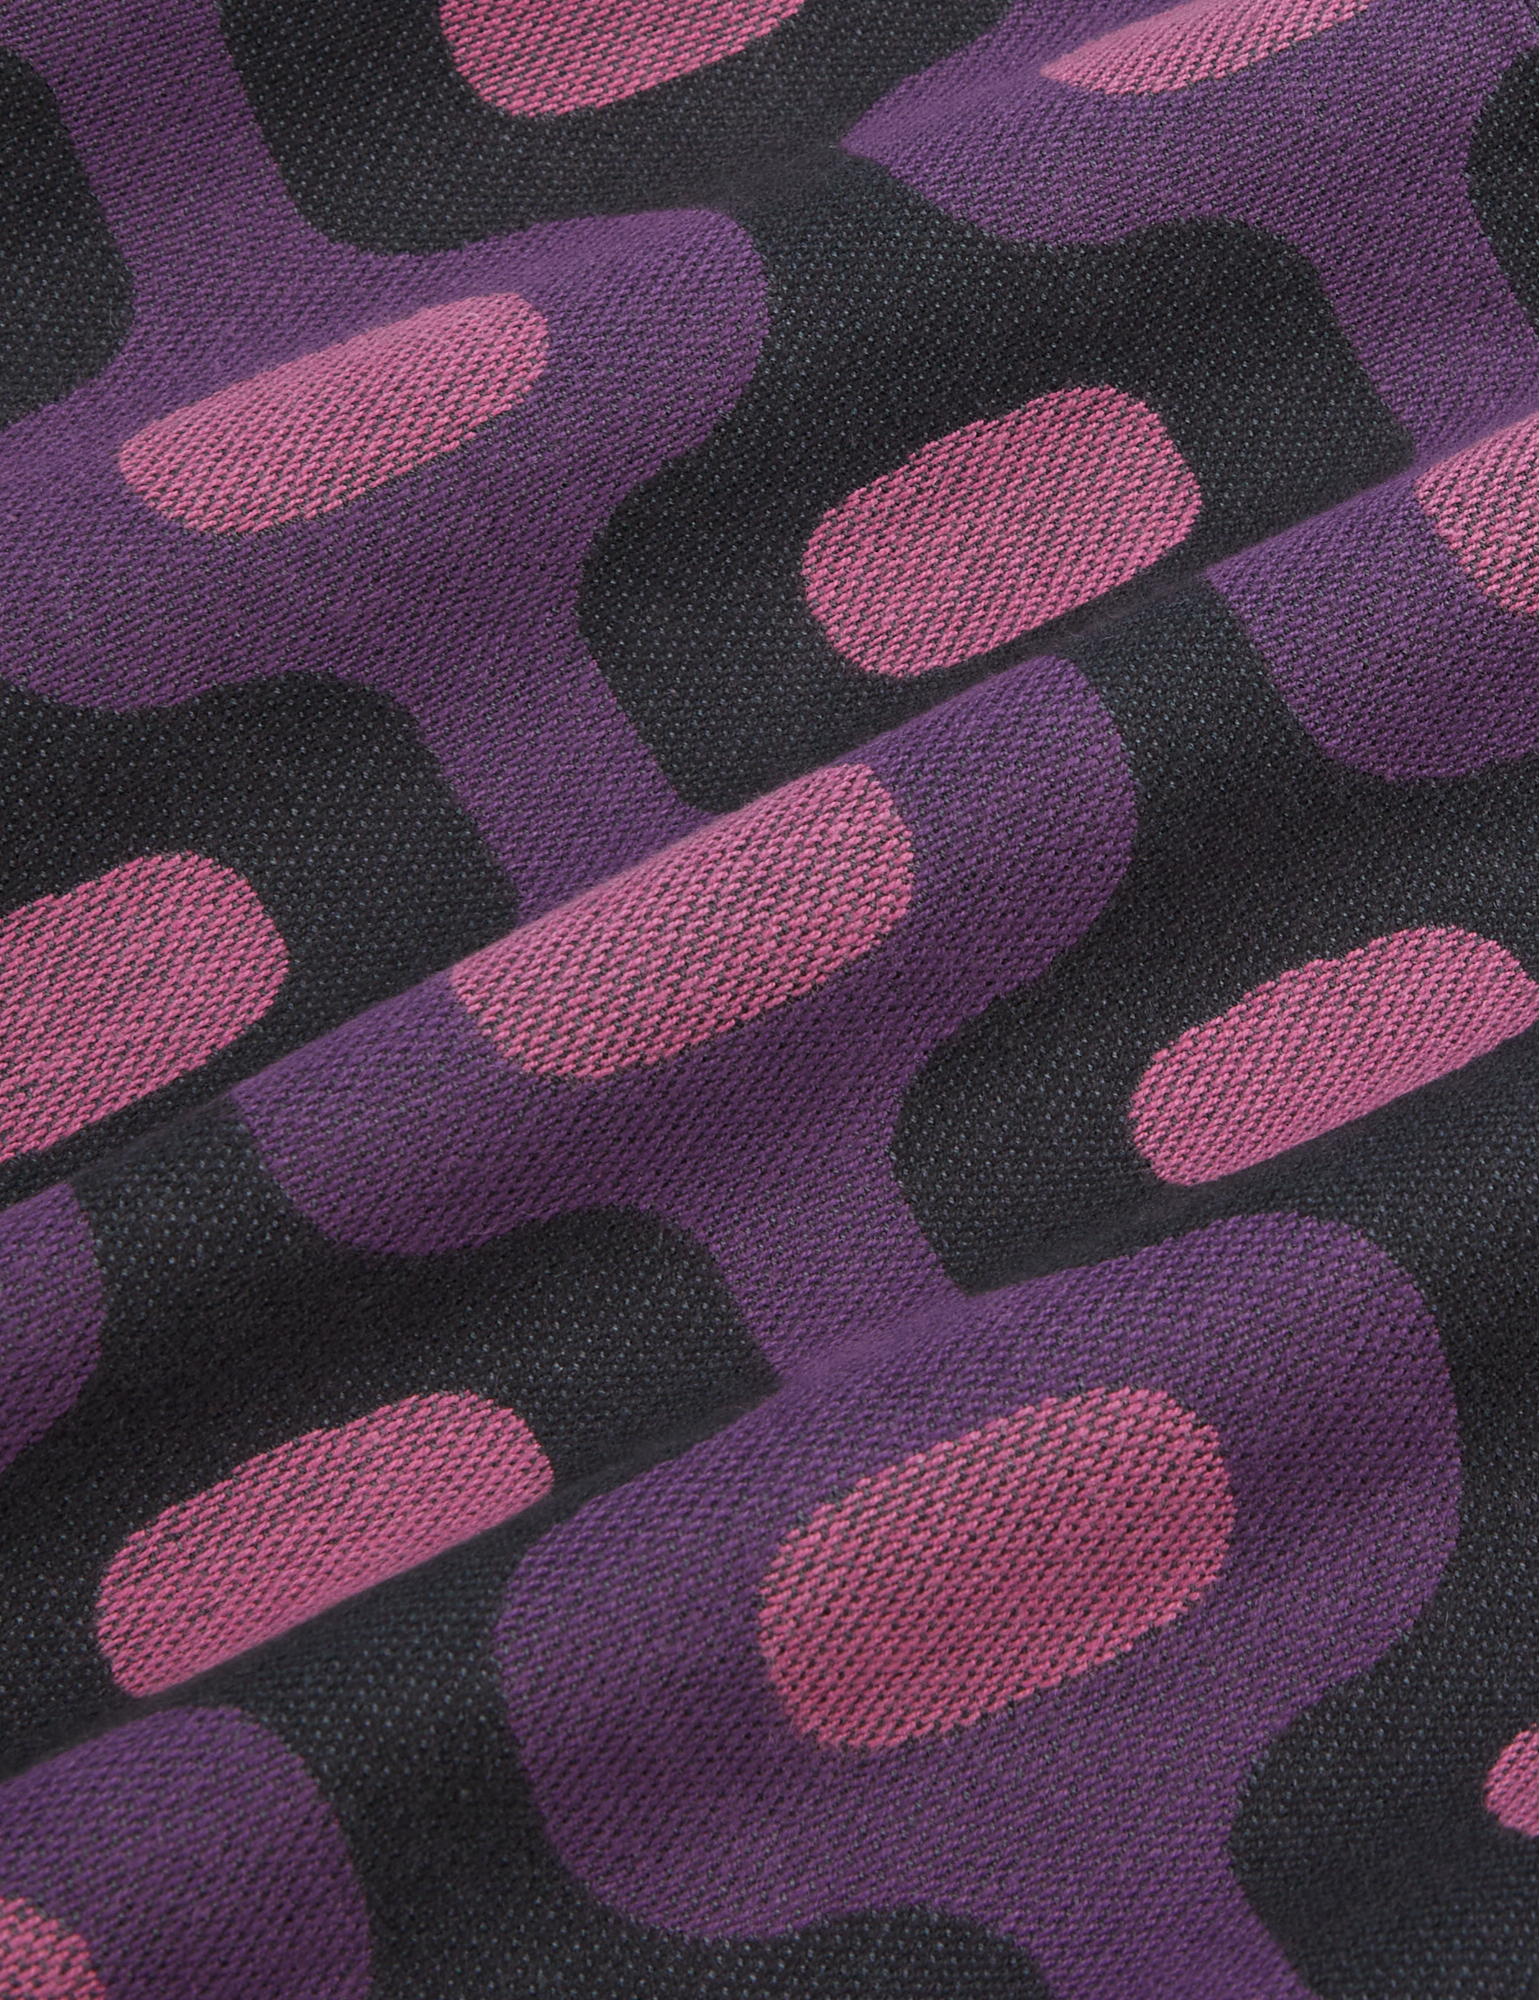  Purple Tile Jacquard Work Jacket fabric detail close up